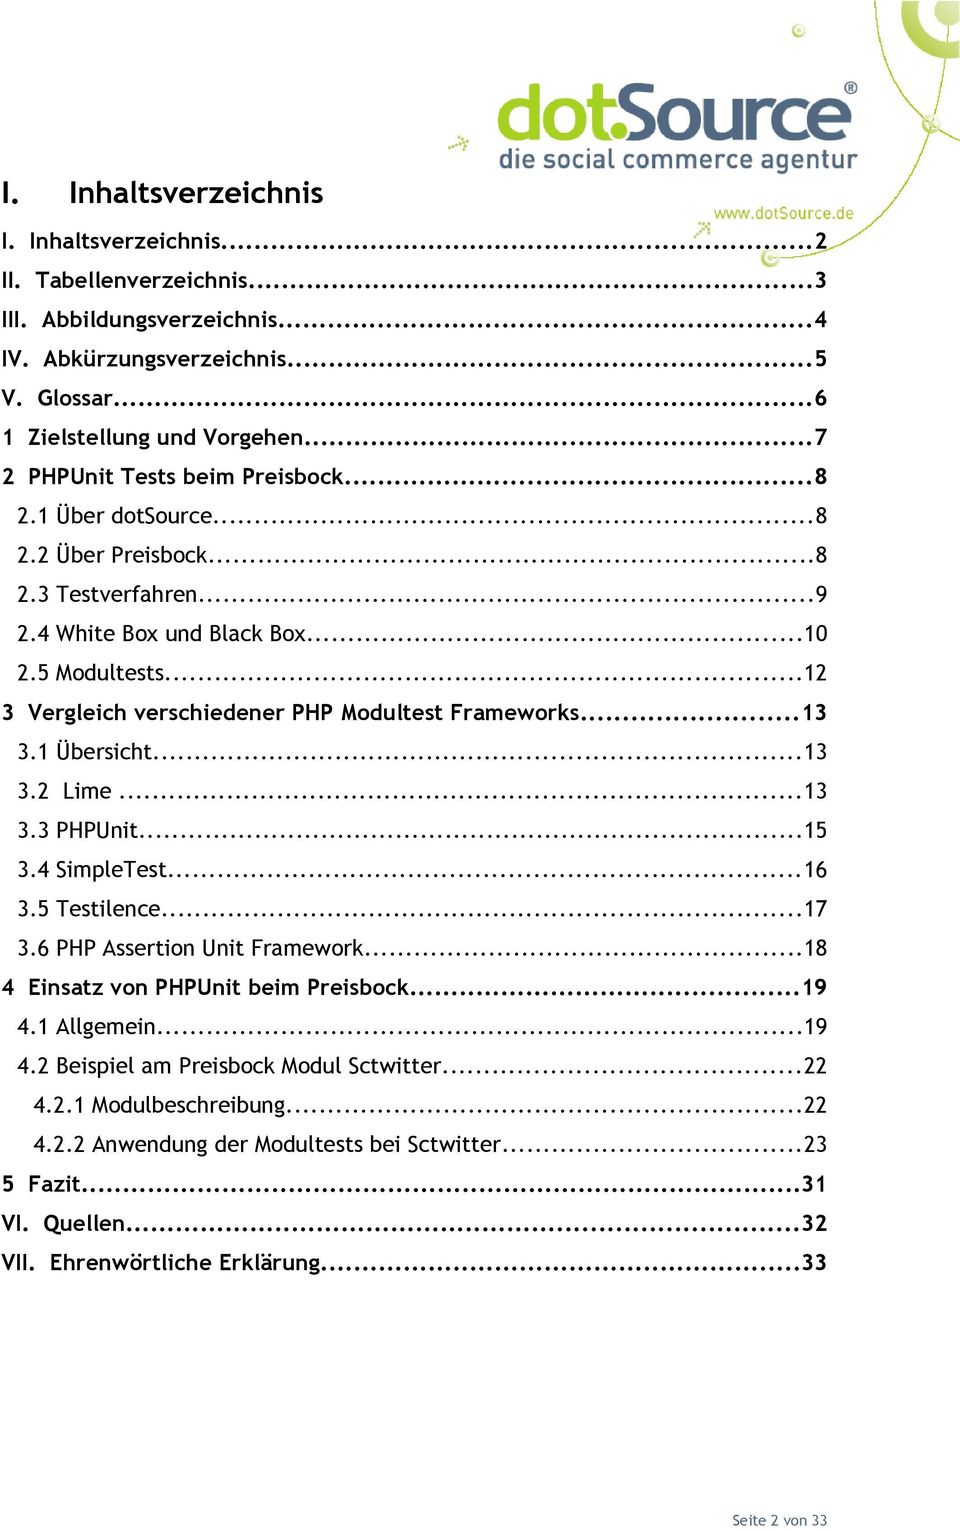 ..12 3 Vergleich verschiedener PHP Modultest Frameworks...13 3.1 Übersicht...13 3.2 Lime...13 3.3 PHPUnit...15 3.4 SimpleTest...16 3.5 Testilence...17 3.6 PHP Assertion Unit Framework.